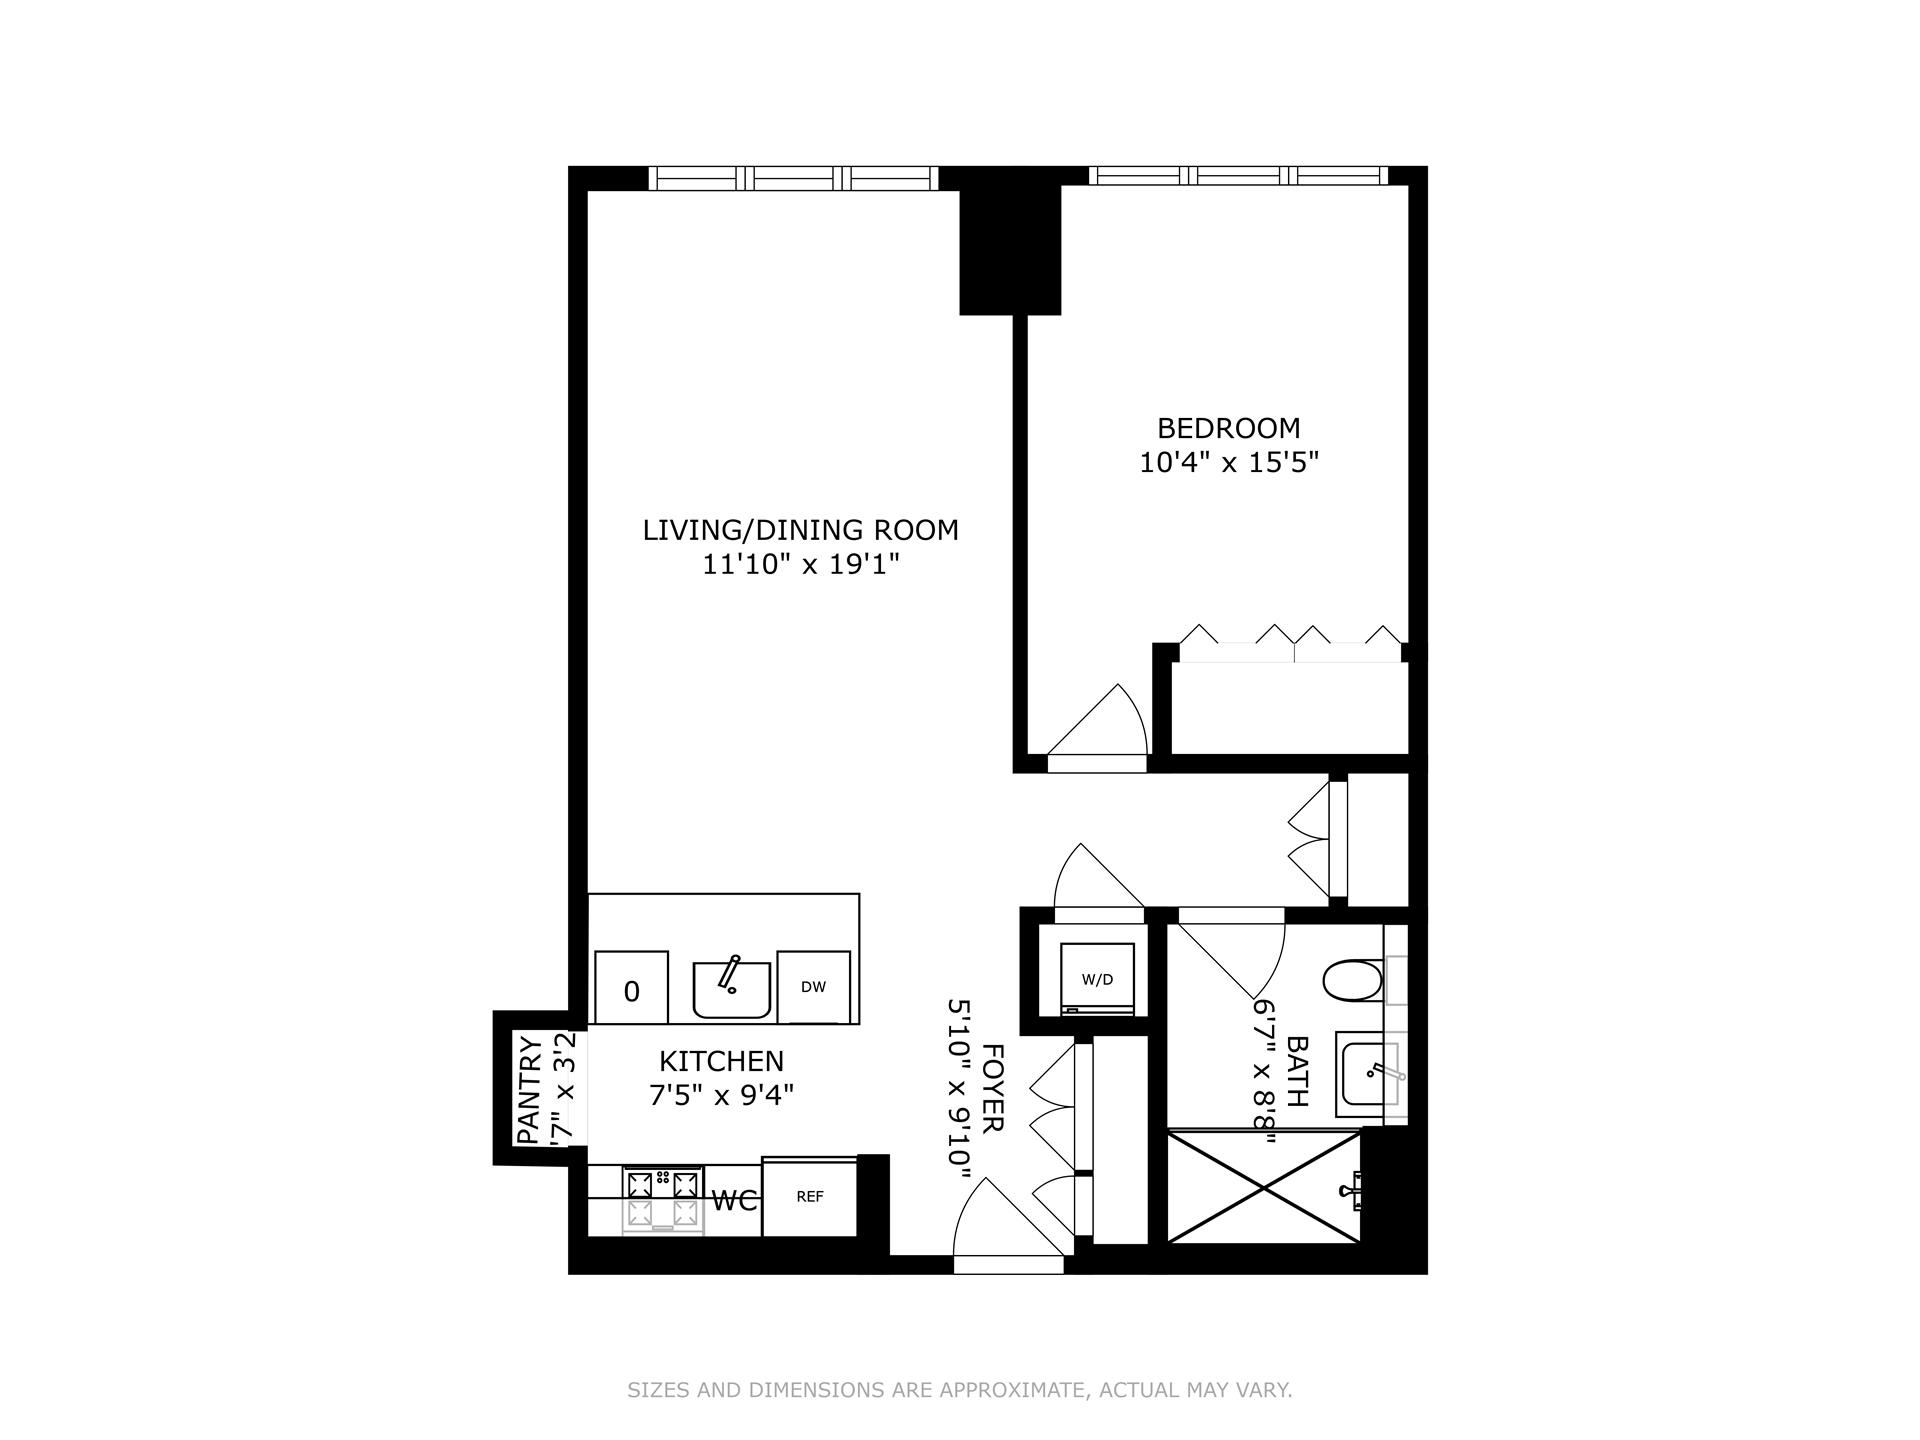 Floorplan for 196 Orchard Street, 6C